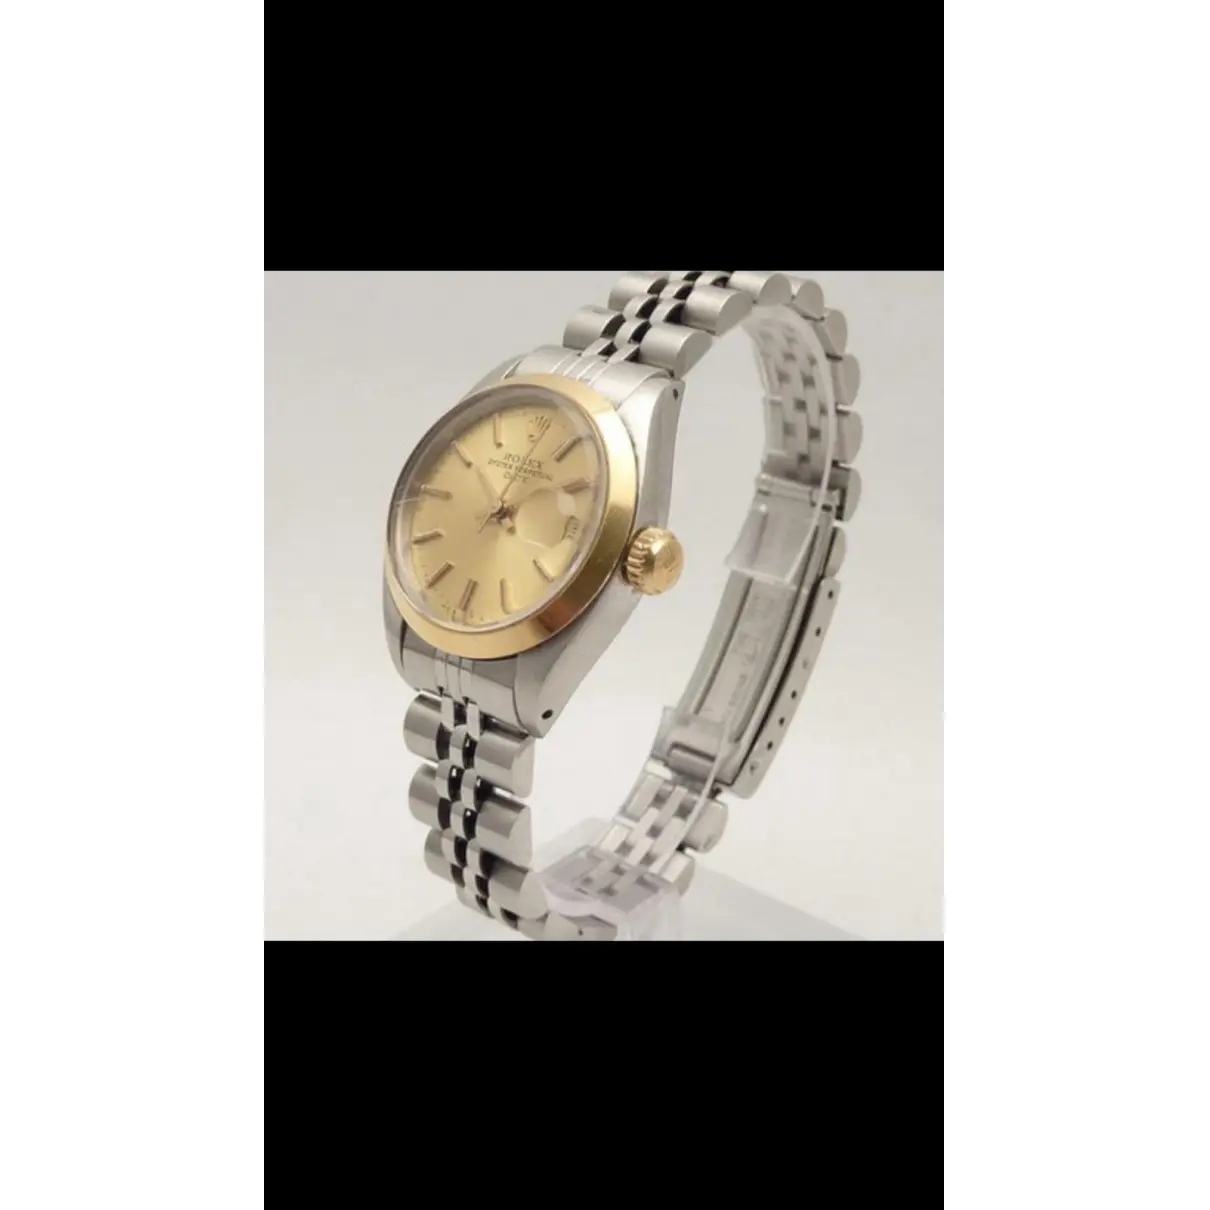 Buy Rolex Silver Watch Air king online - Vintage